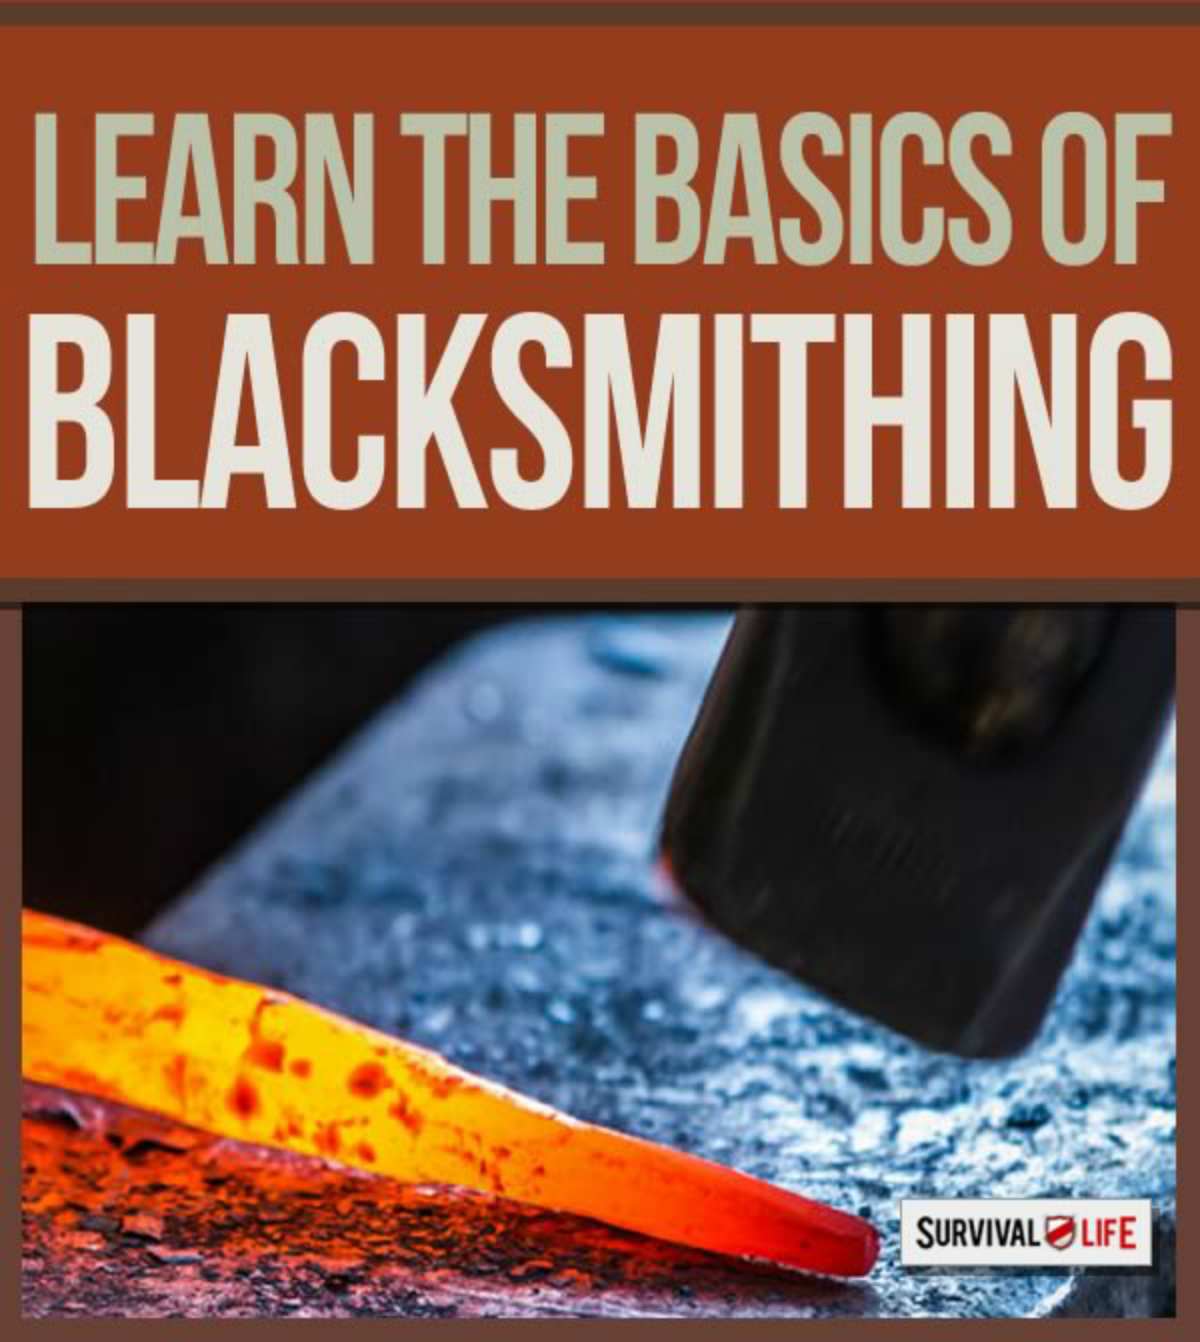 Basic of blacksmithing | "Old World" Primitive Survival Skills You'll WISH You Knew Before SHTF